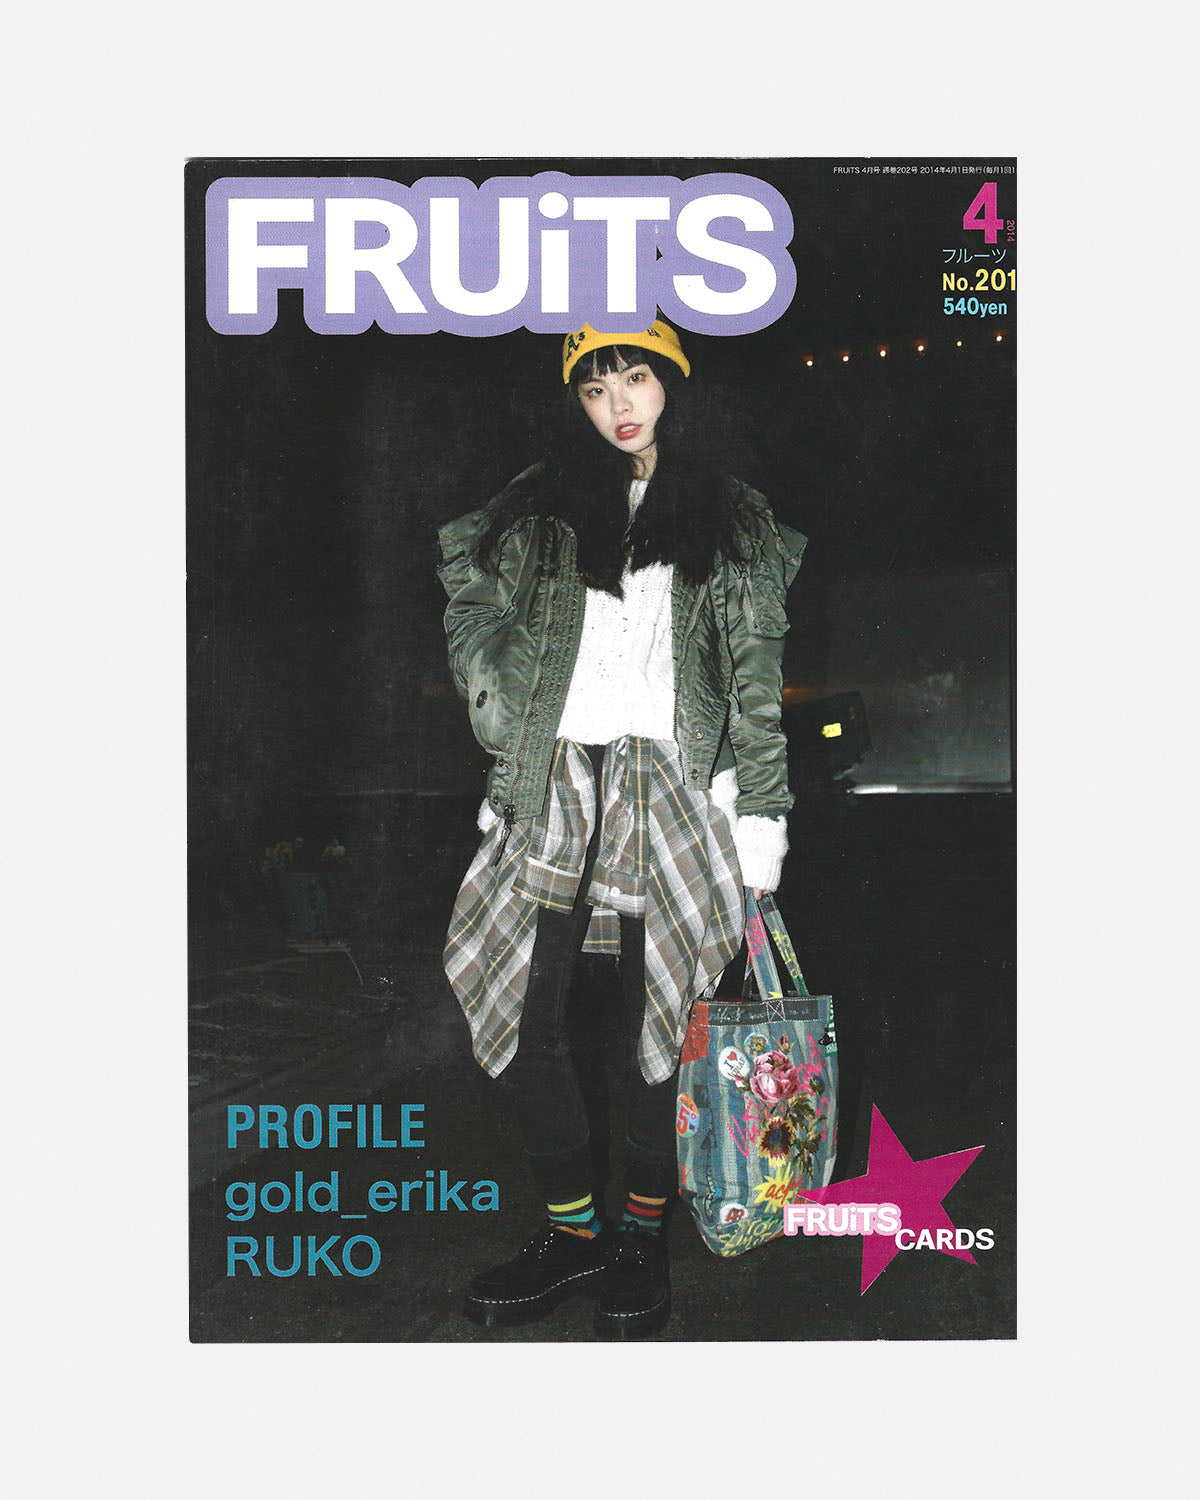 Fruits Magazine April 2014 (#201)